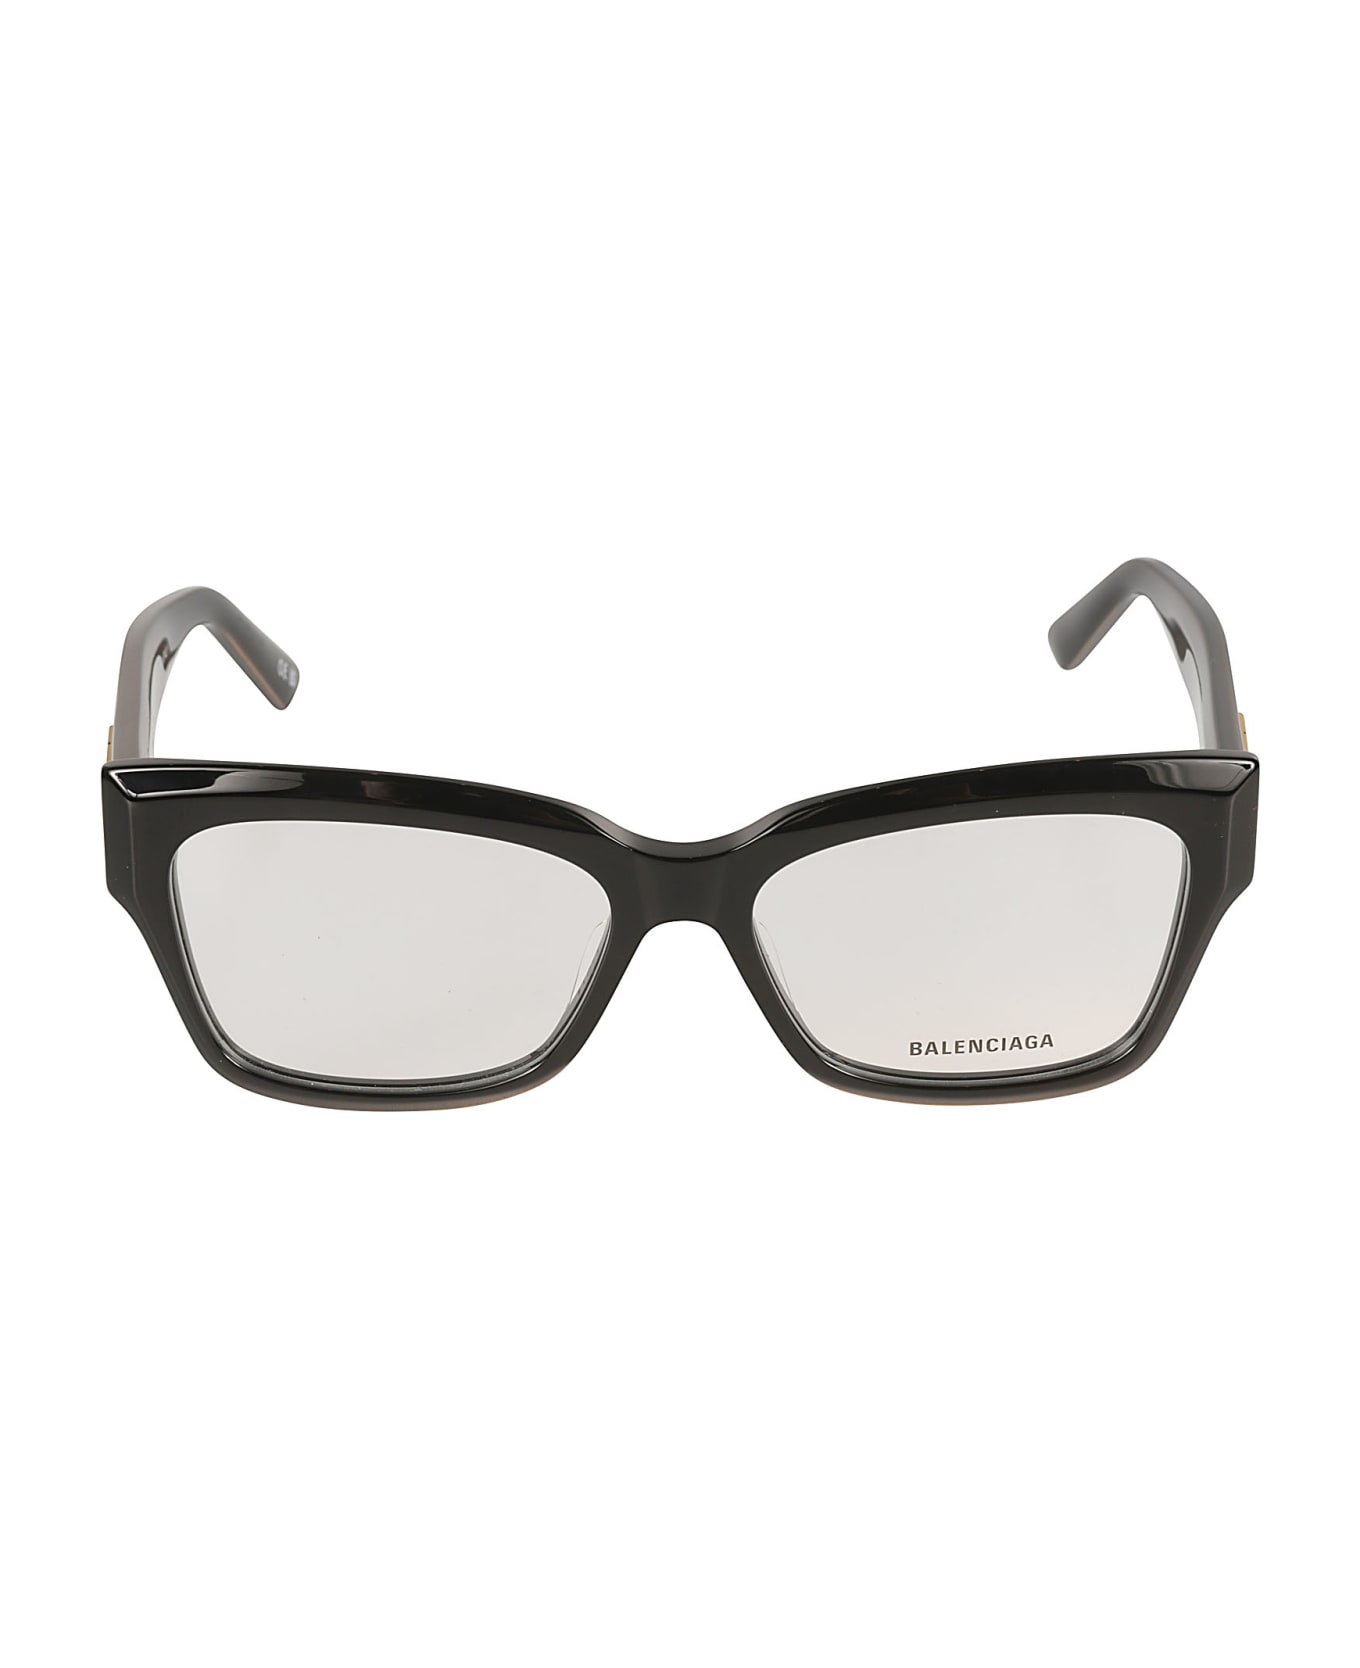 Balenciaga Eyewear Bb Plaque Square Frame Glasses - Black/Transparent アイウェア